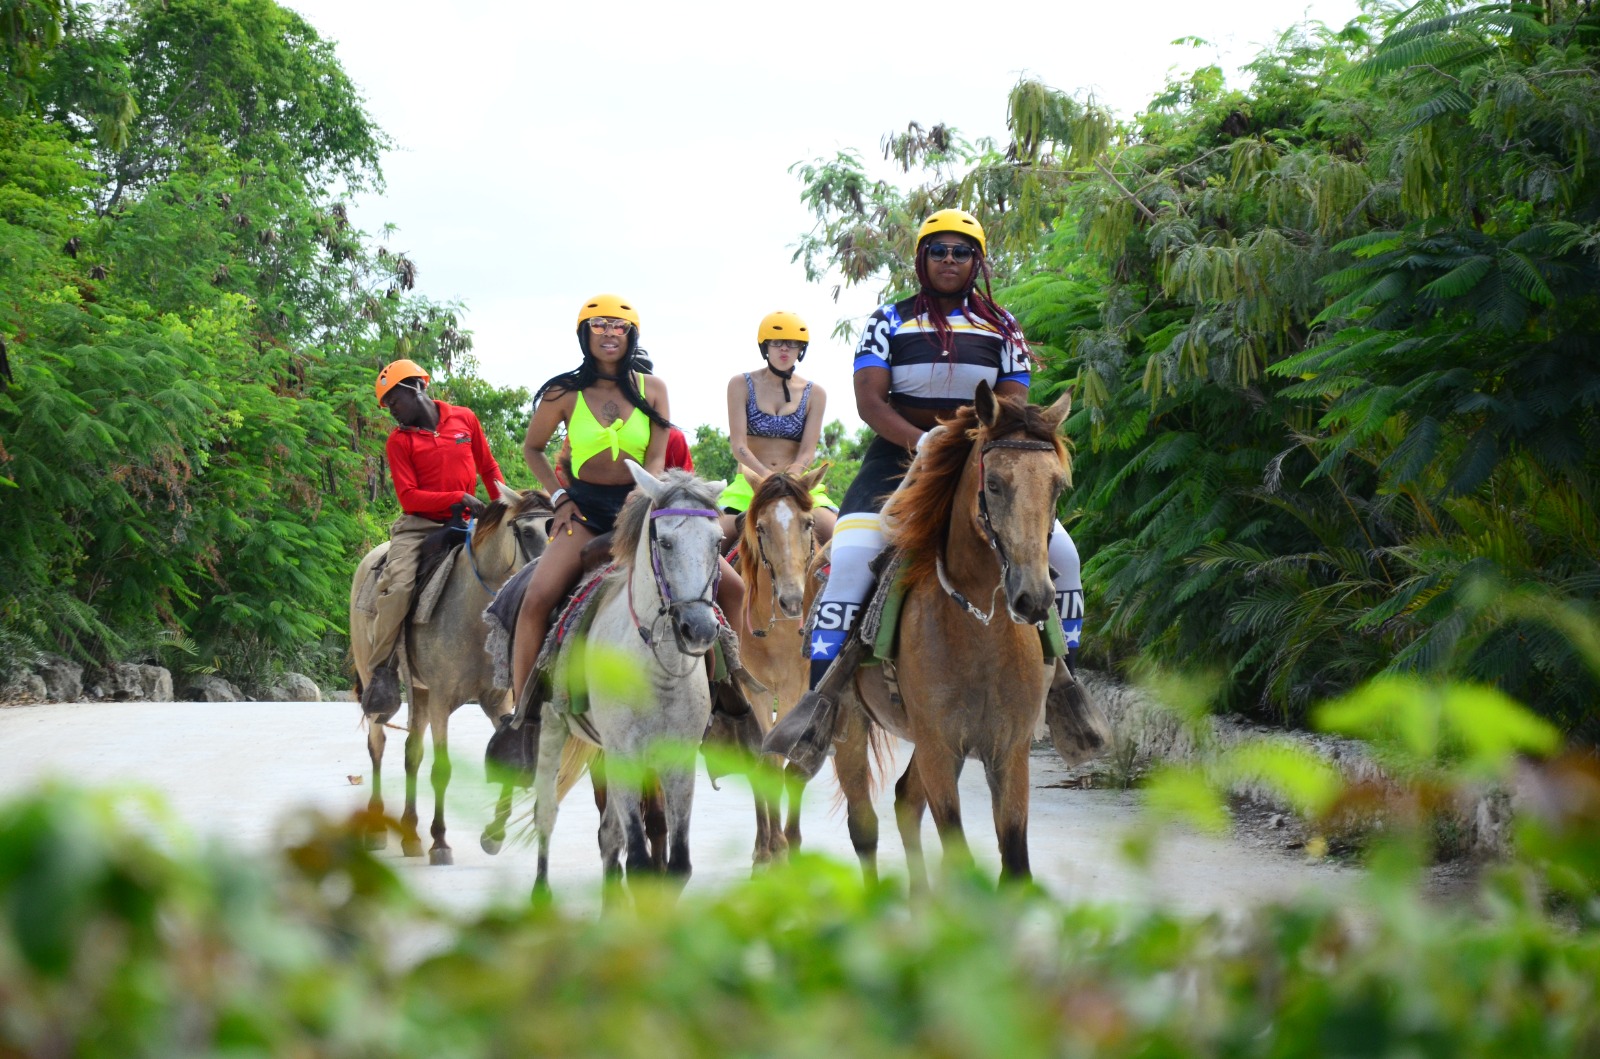 Bavaro Adventure Park 3 in 1 Polaris - Horse Back - Zipline